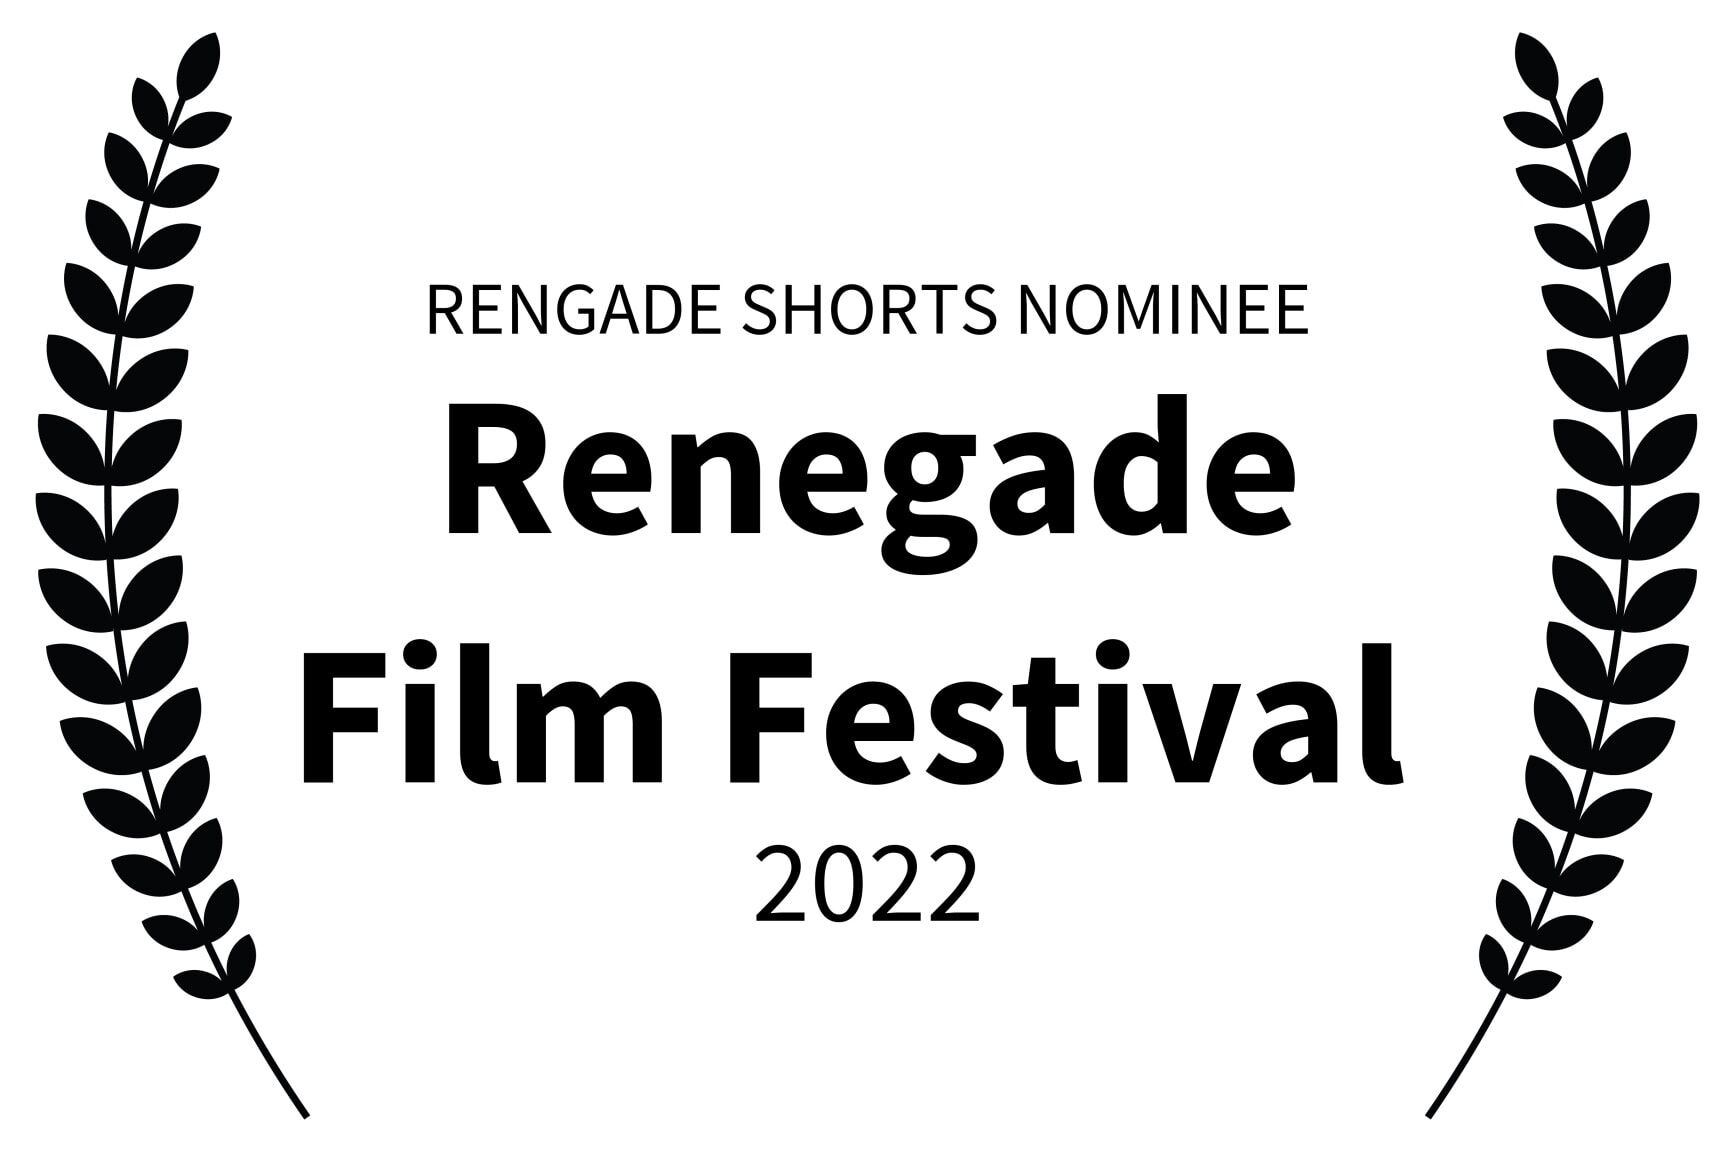 RENGADE SHORTS NOMINEE - Renegade Film Festival  - 2022